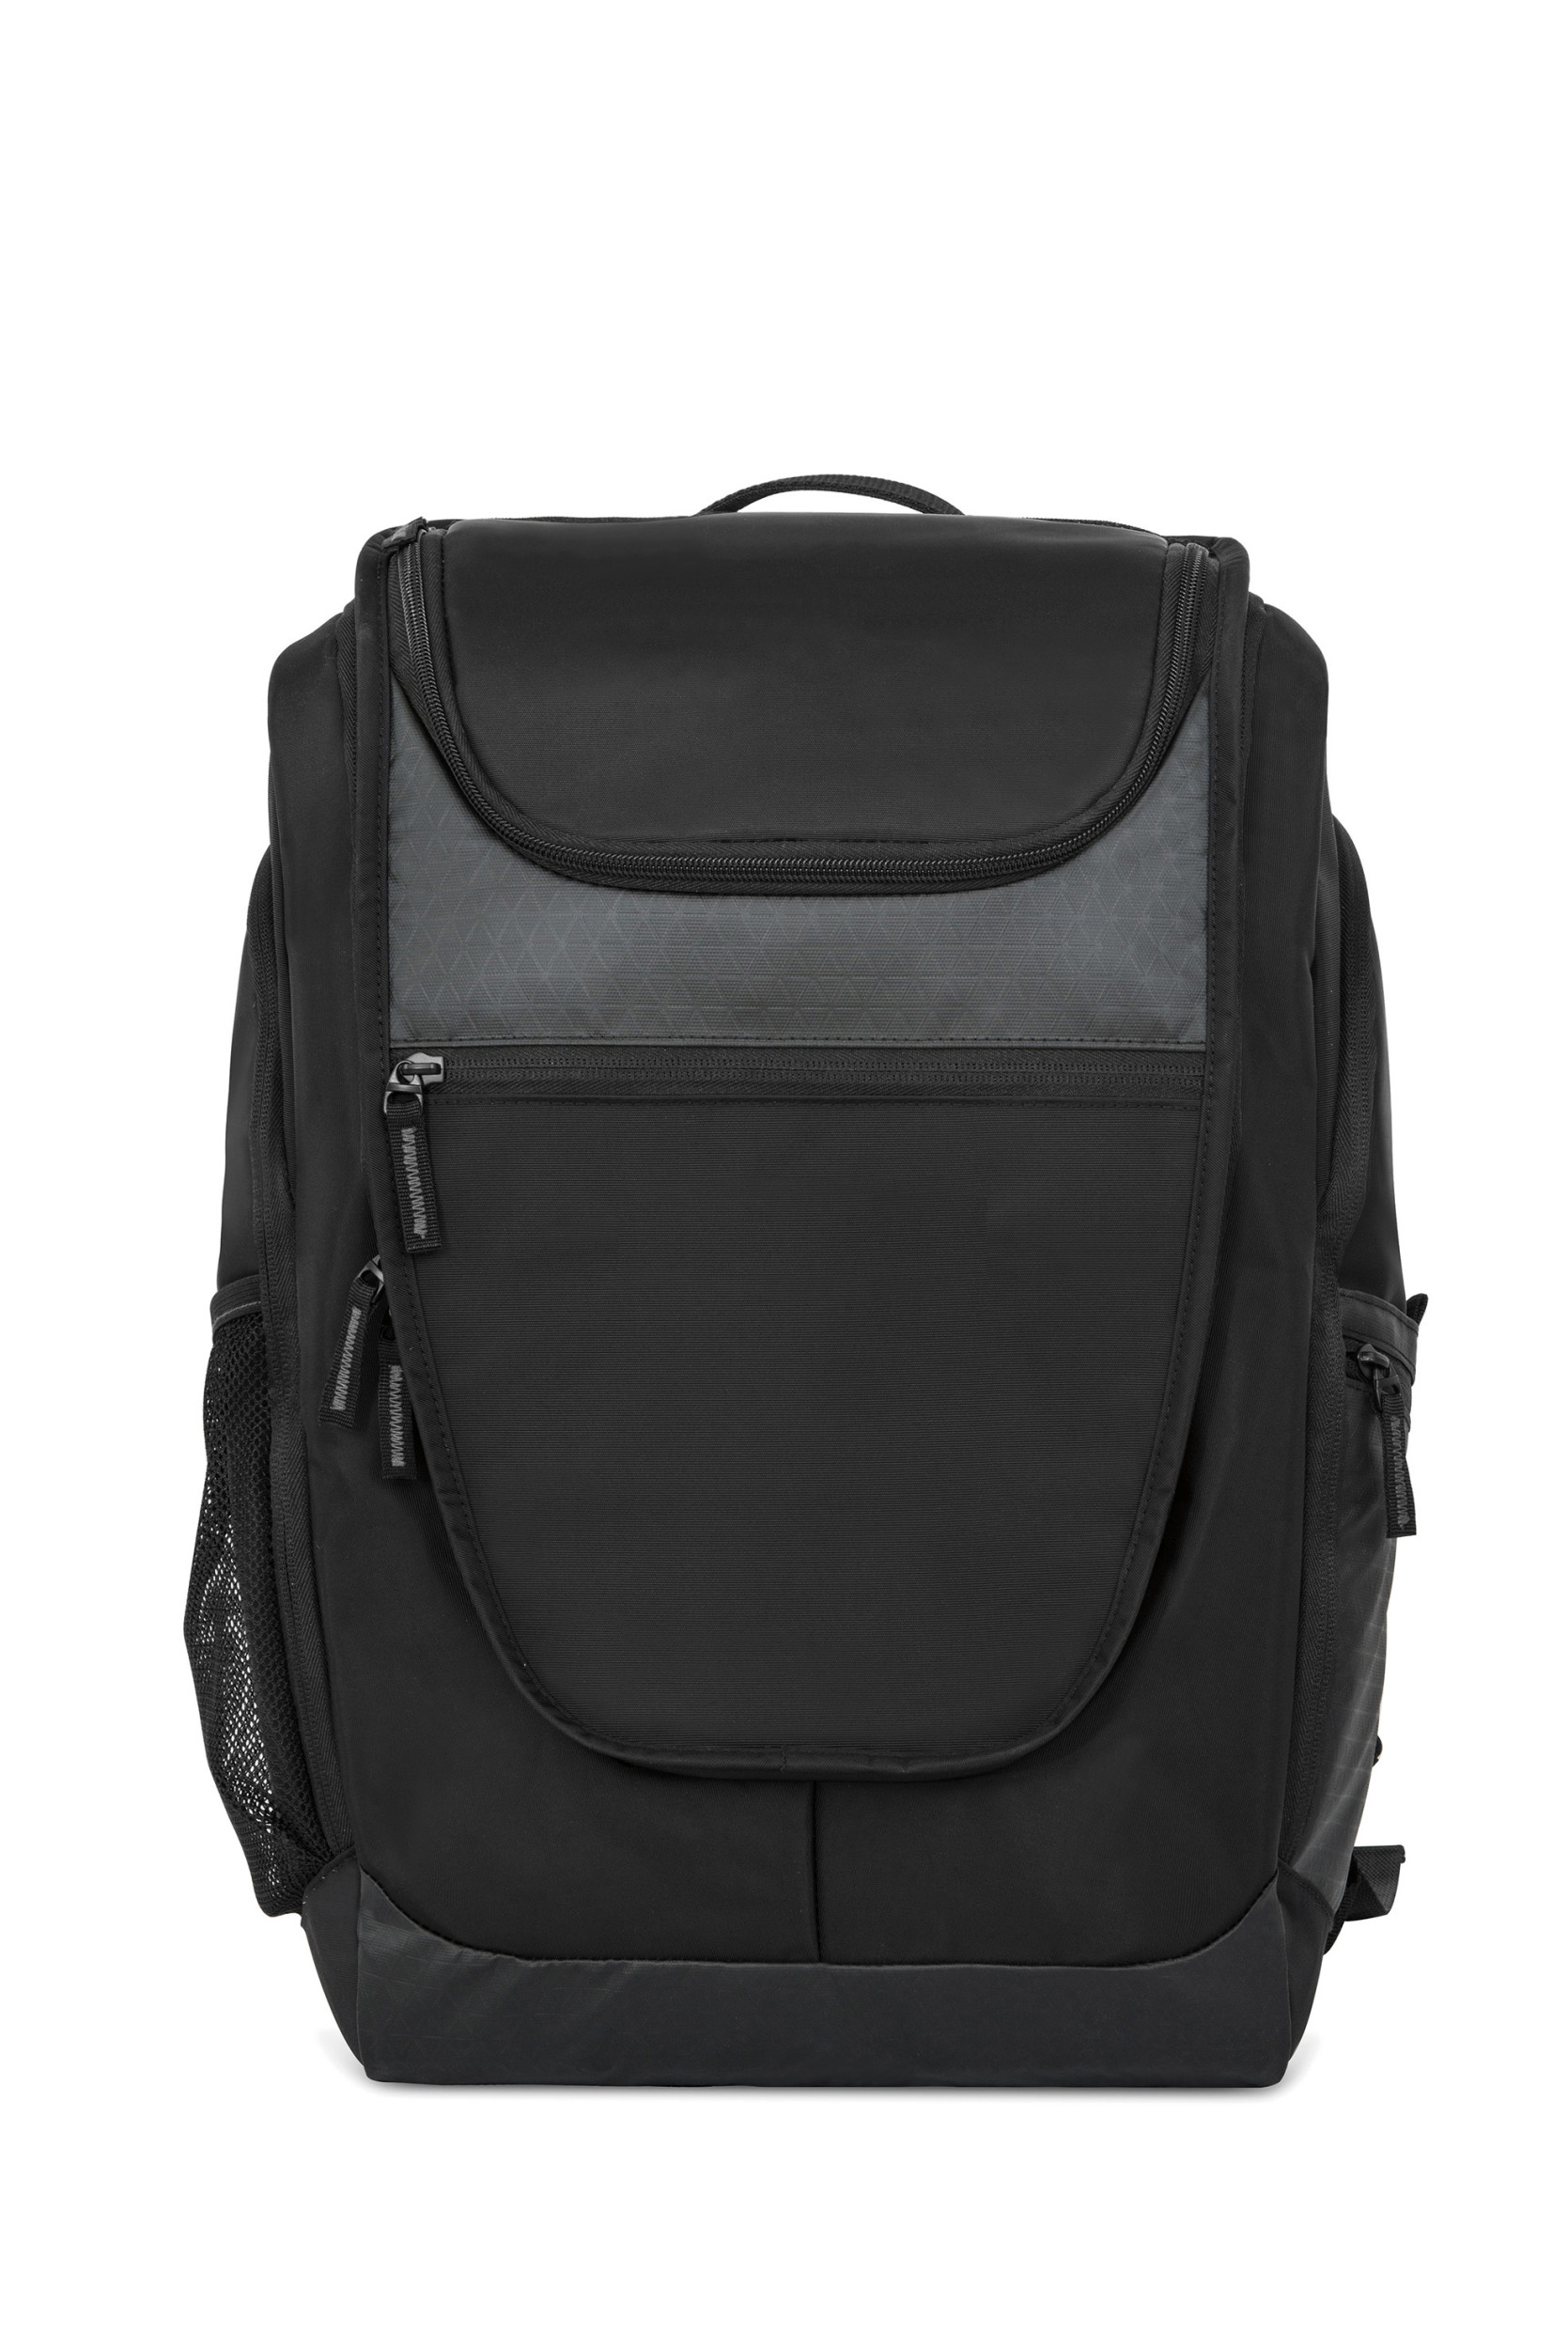 Gemline 5239 - Reveal Computer Backpack